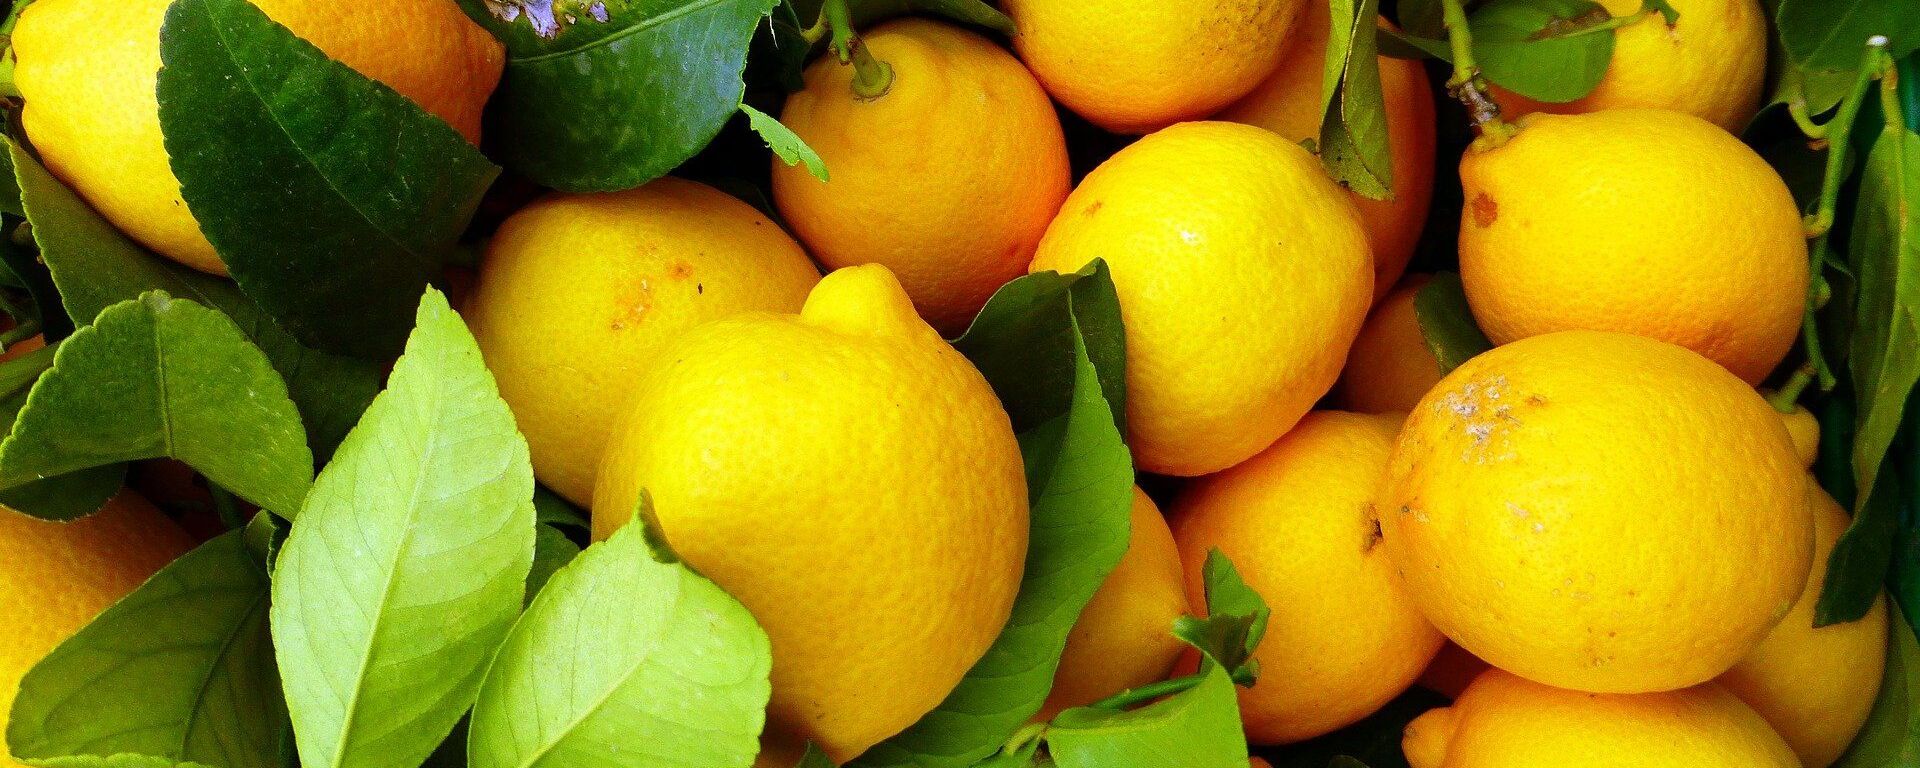 Лимоны, архивное фото - Sputnik Таджикистан, 1920, 02.04.2021